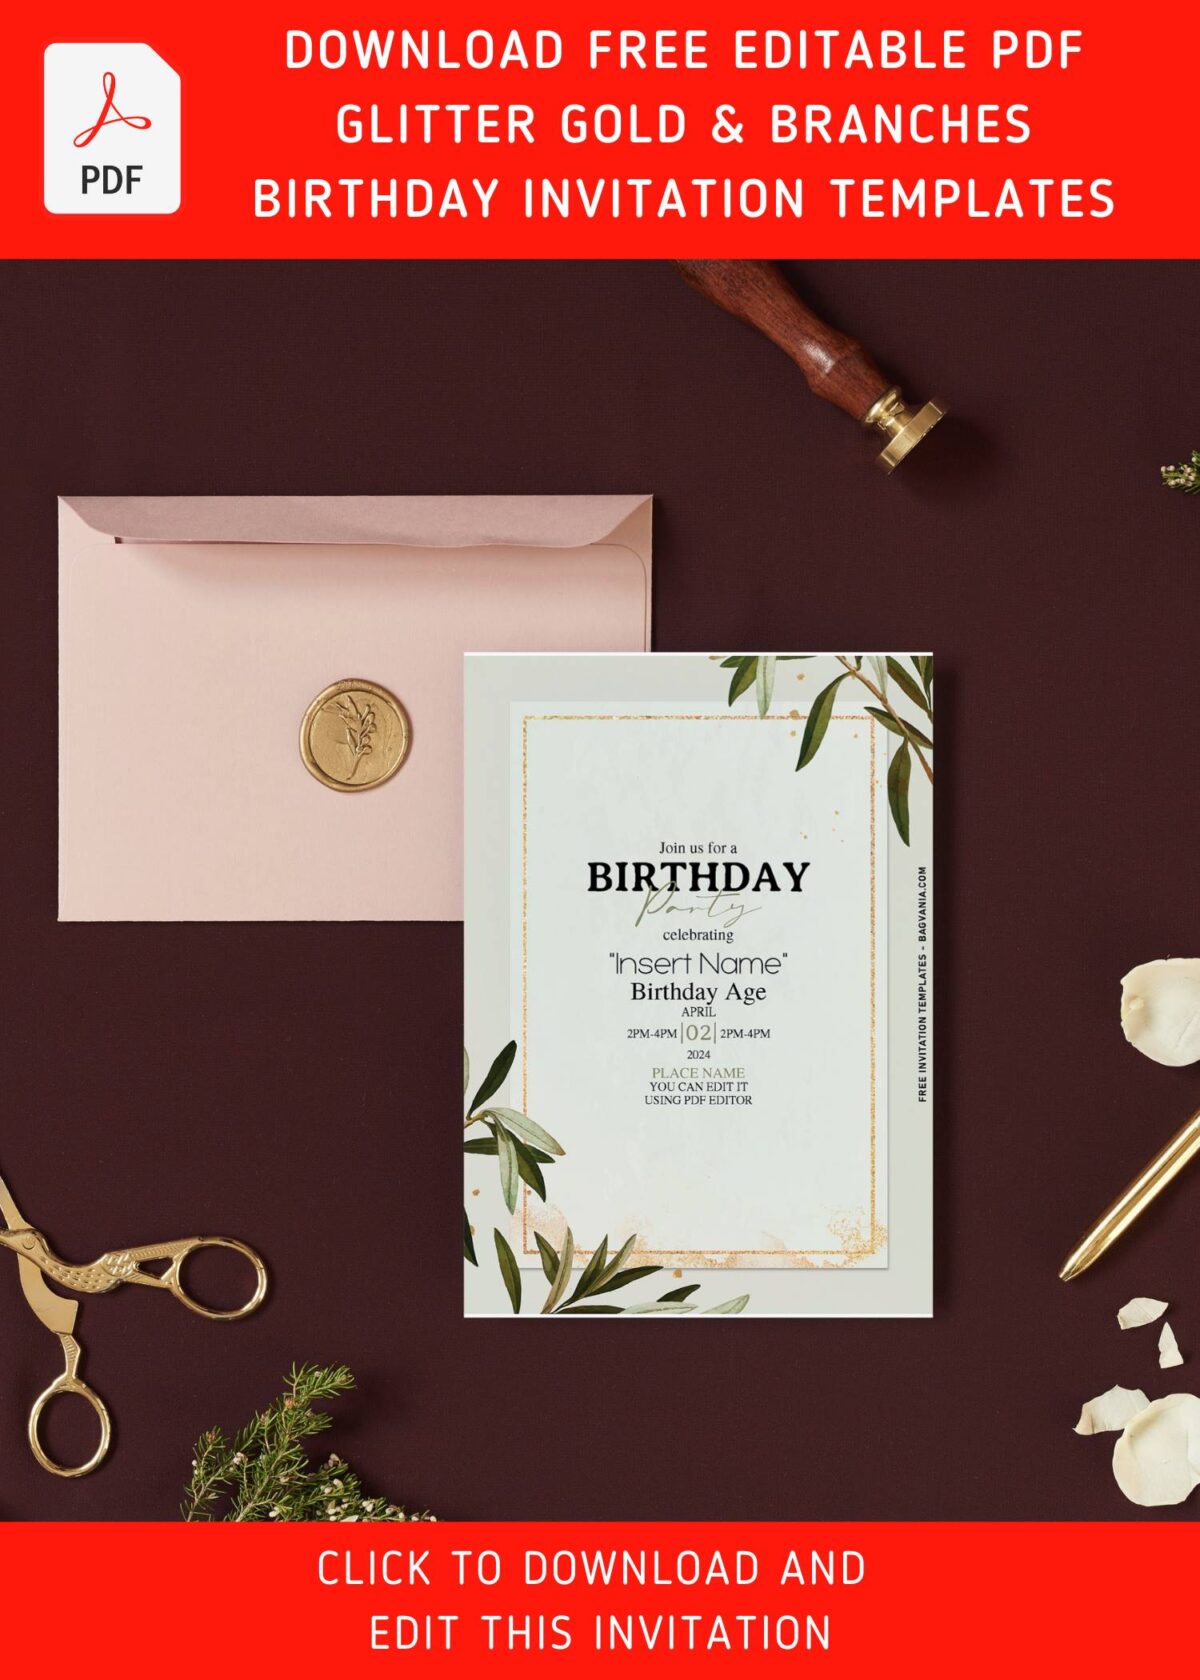 (Free Editable PDF) Glitter Gold Frame & Branches Birthday Invitation Templates with portrait orientation design